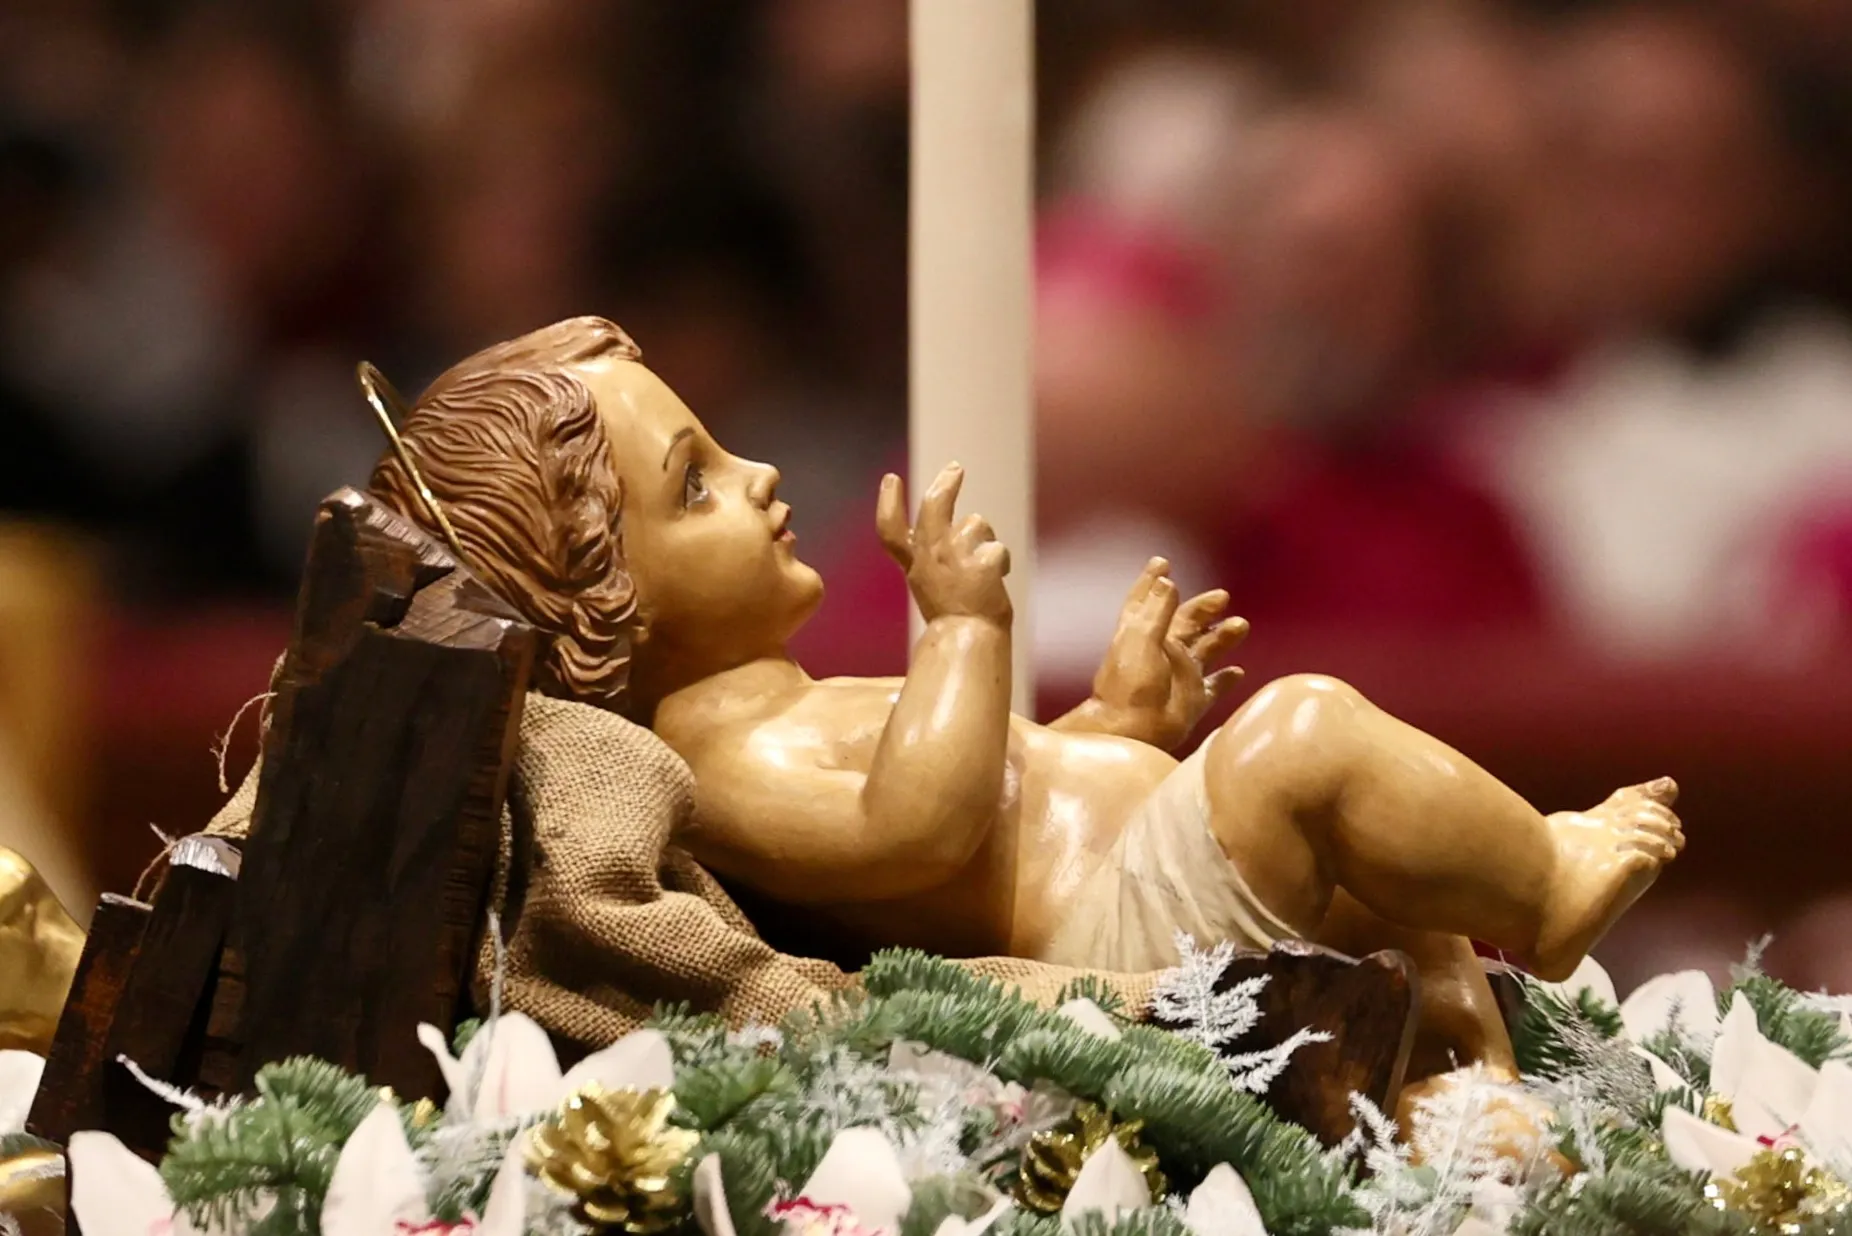 Christmas Mass in St. Peter's Basilica Dec. 24, 2022. Credit: Daniel Ibanez/CNA.